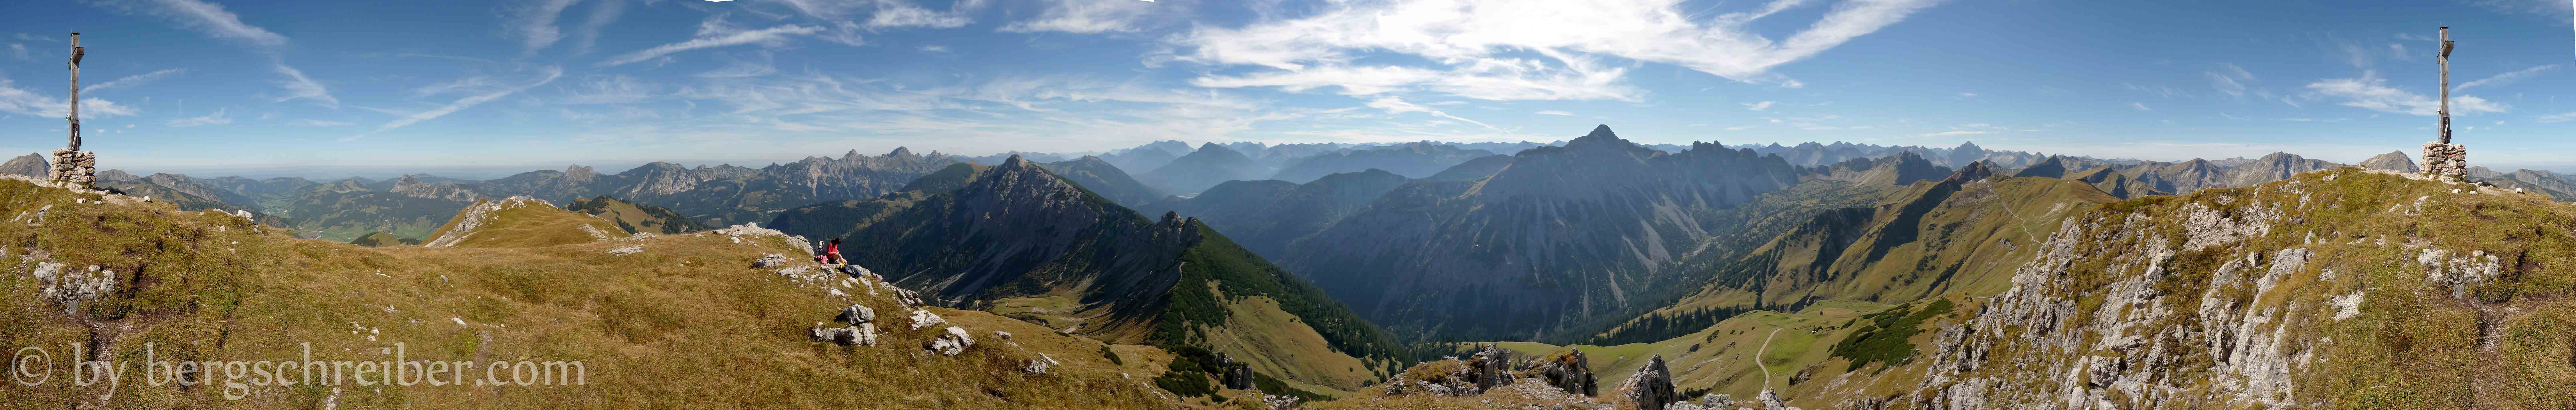 Sulzspitze Gipfelpanorama 360°, großes Panorama mit 8 MB siehe Link "Panoramio"